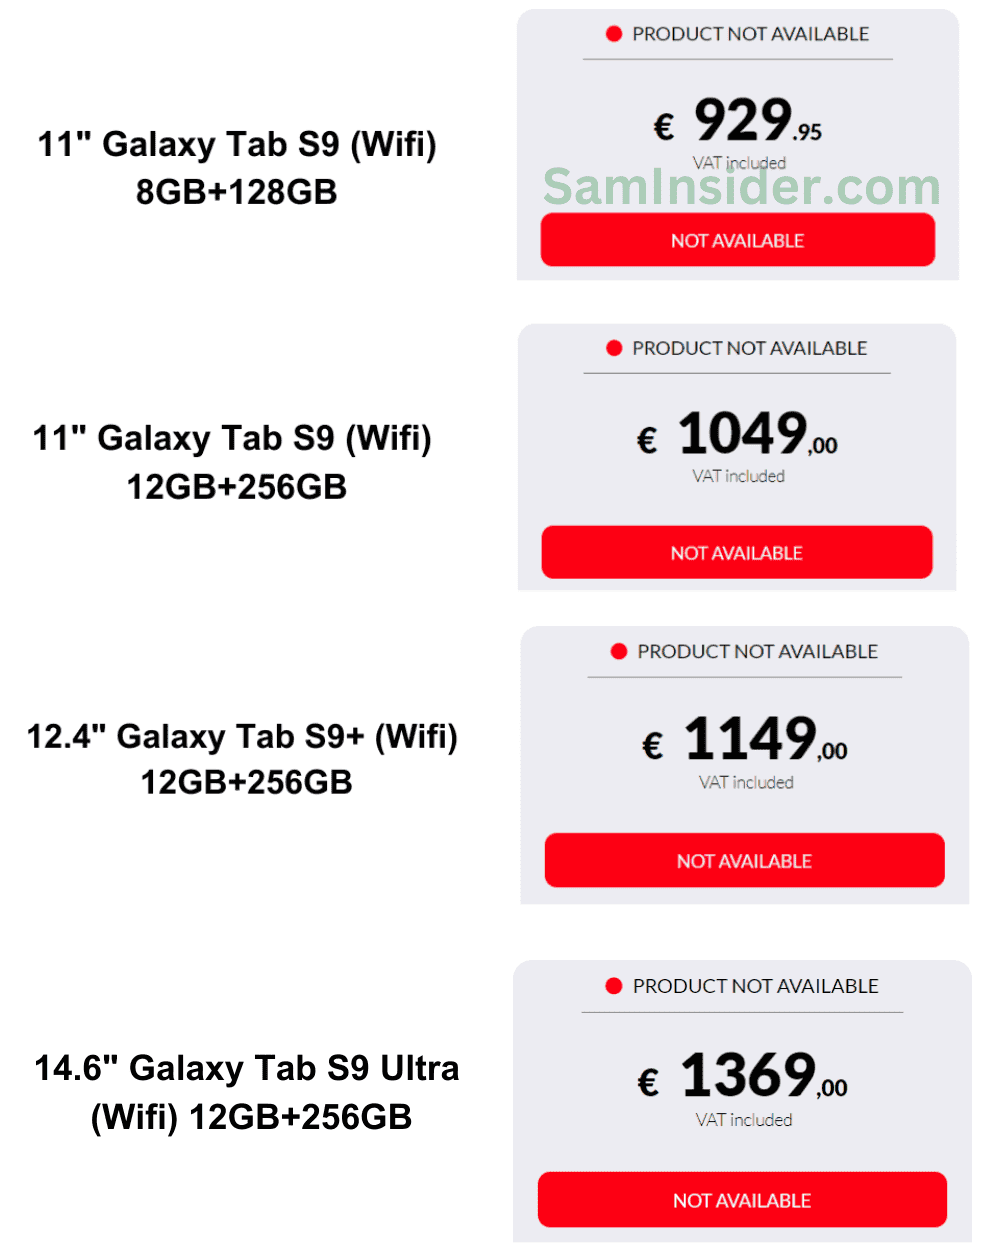 Galaxy Tab S9 EU pricing